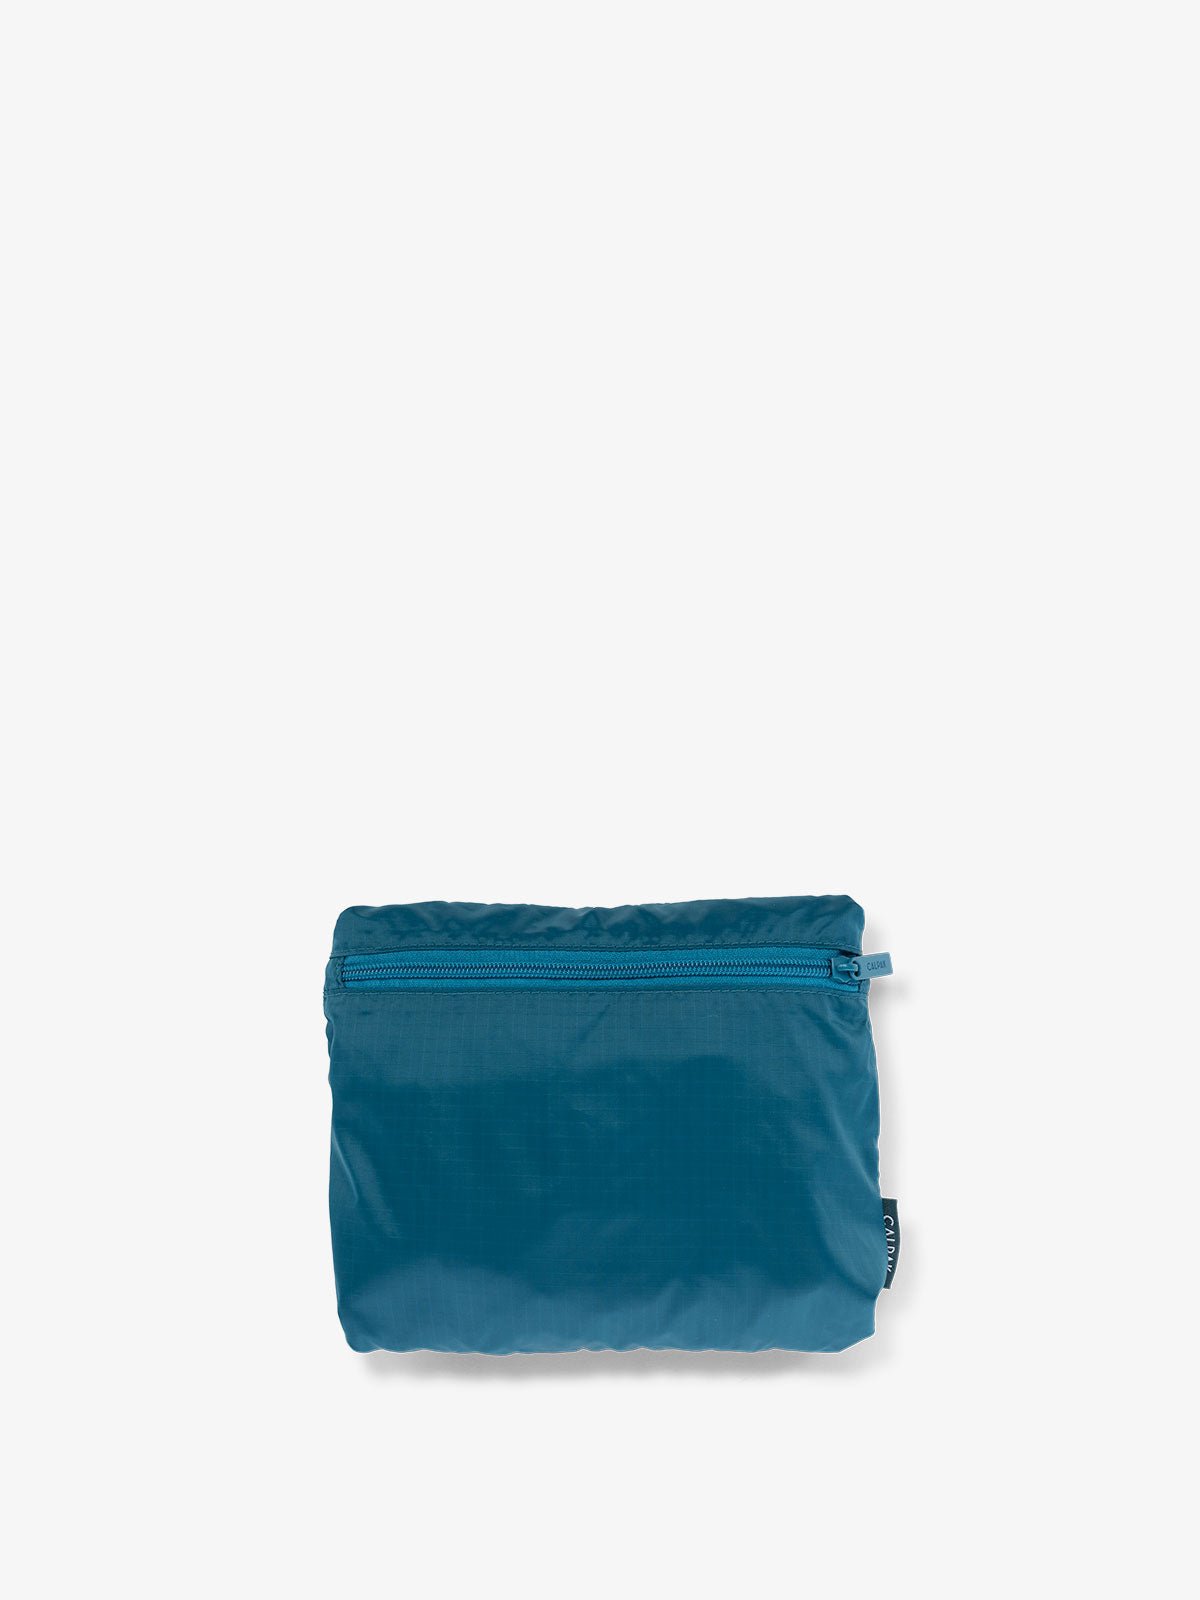 CALPAK Compakt foldable duffle bag for travel in lagoon blue